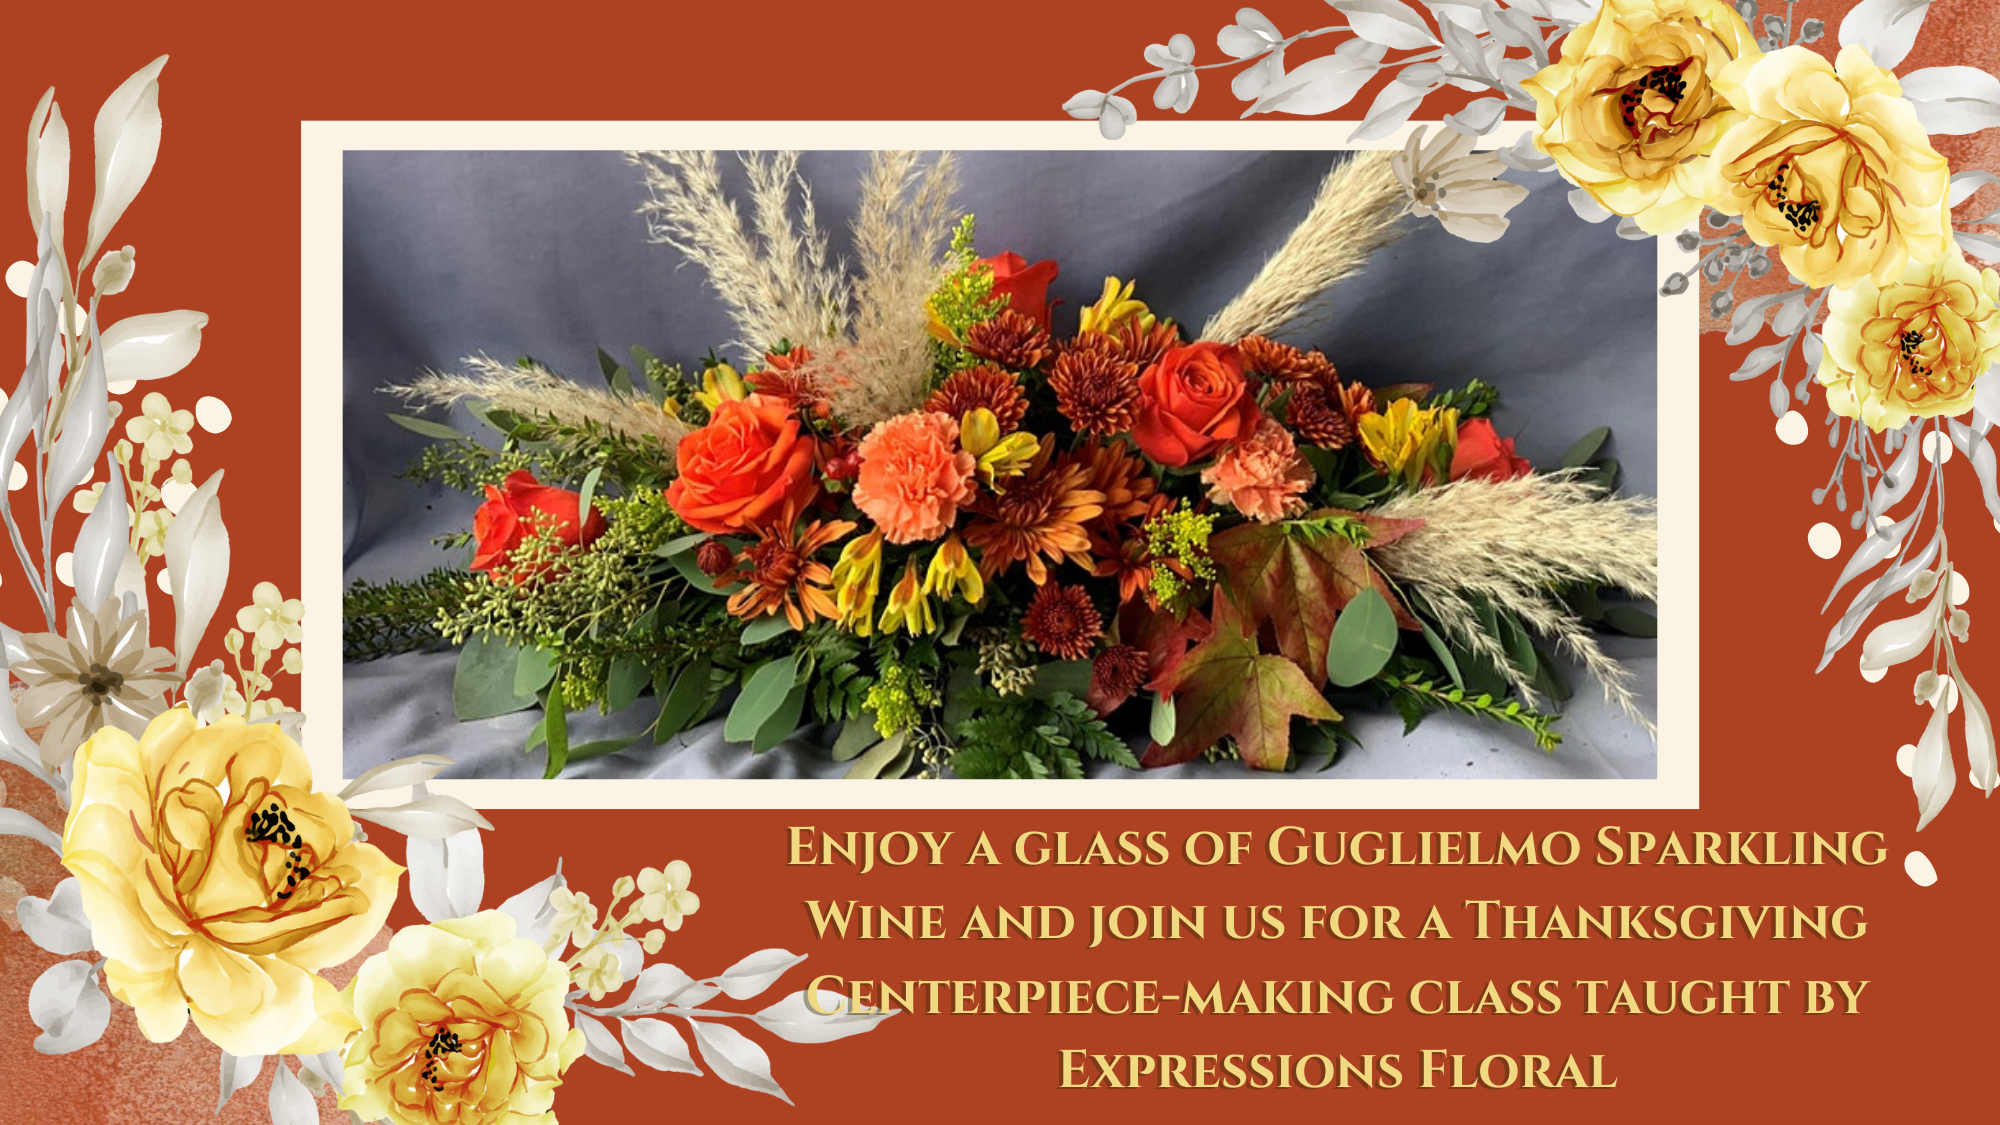 Thanksgiving Centerpiece Class at Guglielmo Winery